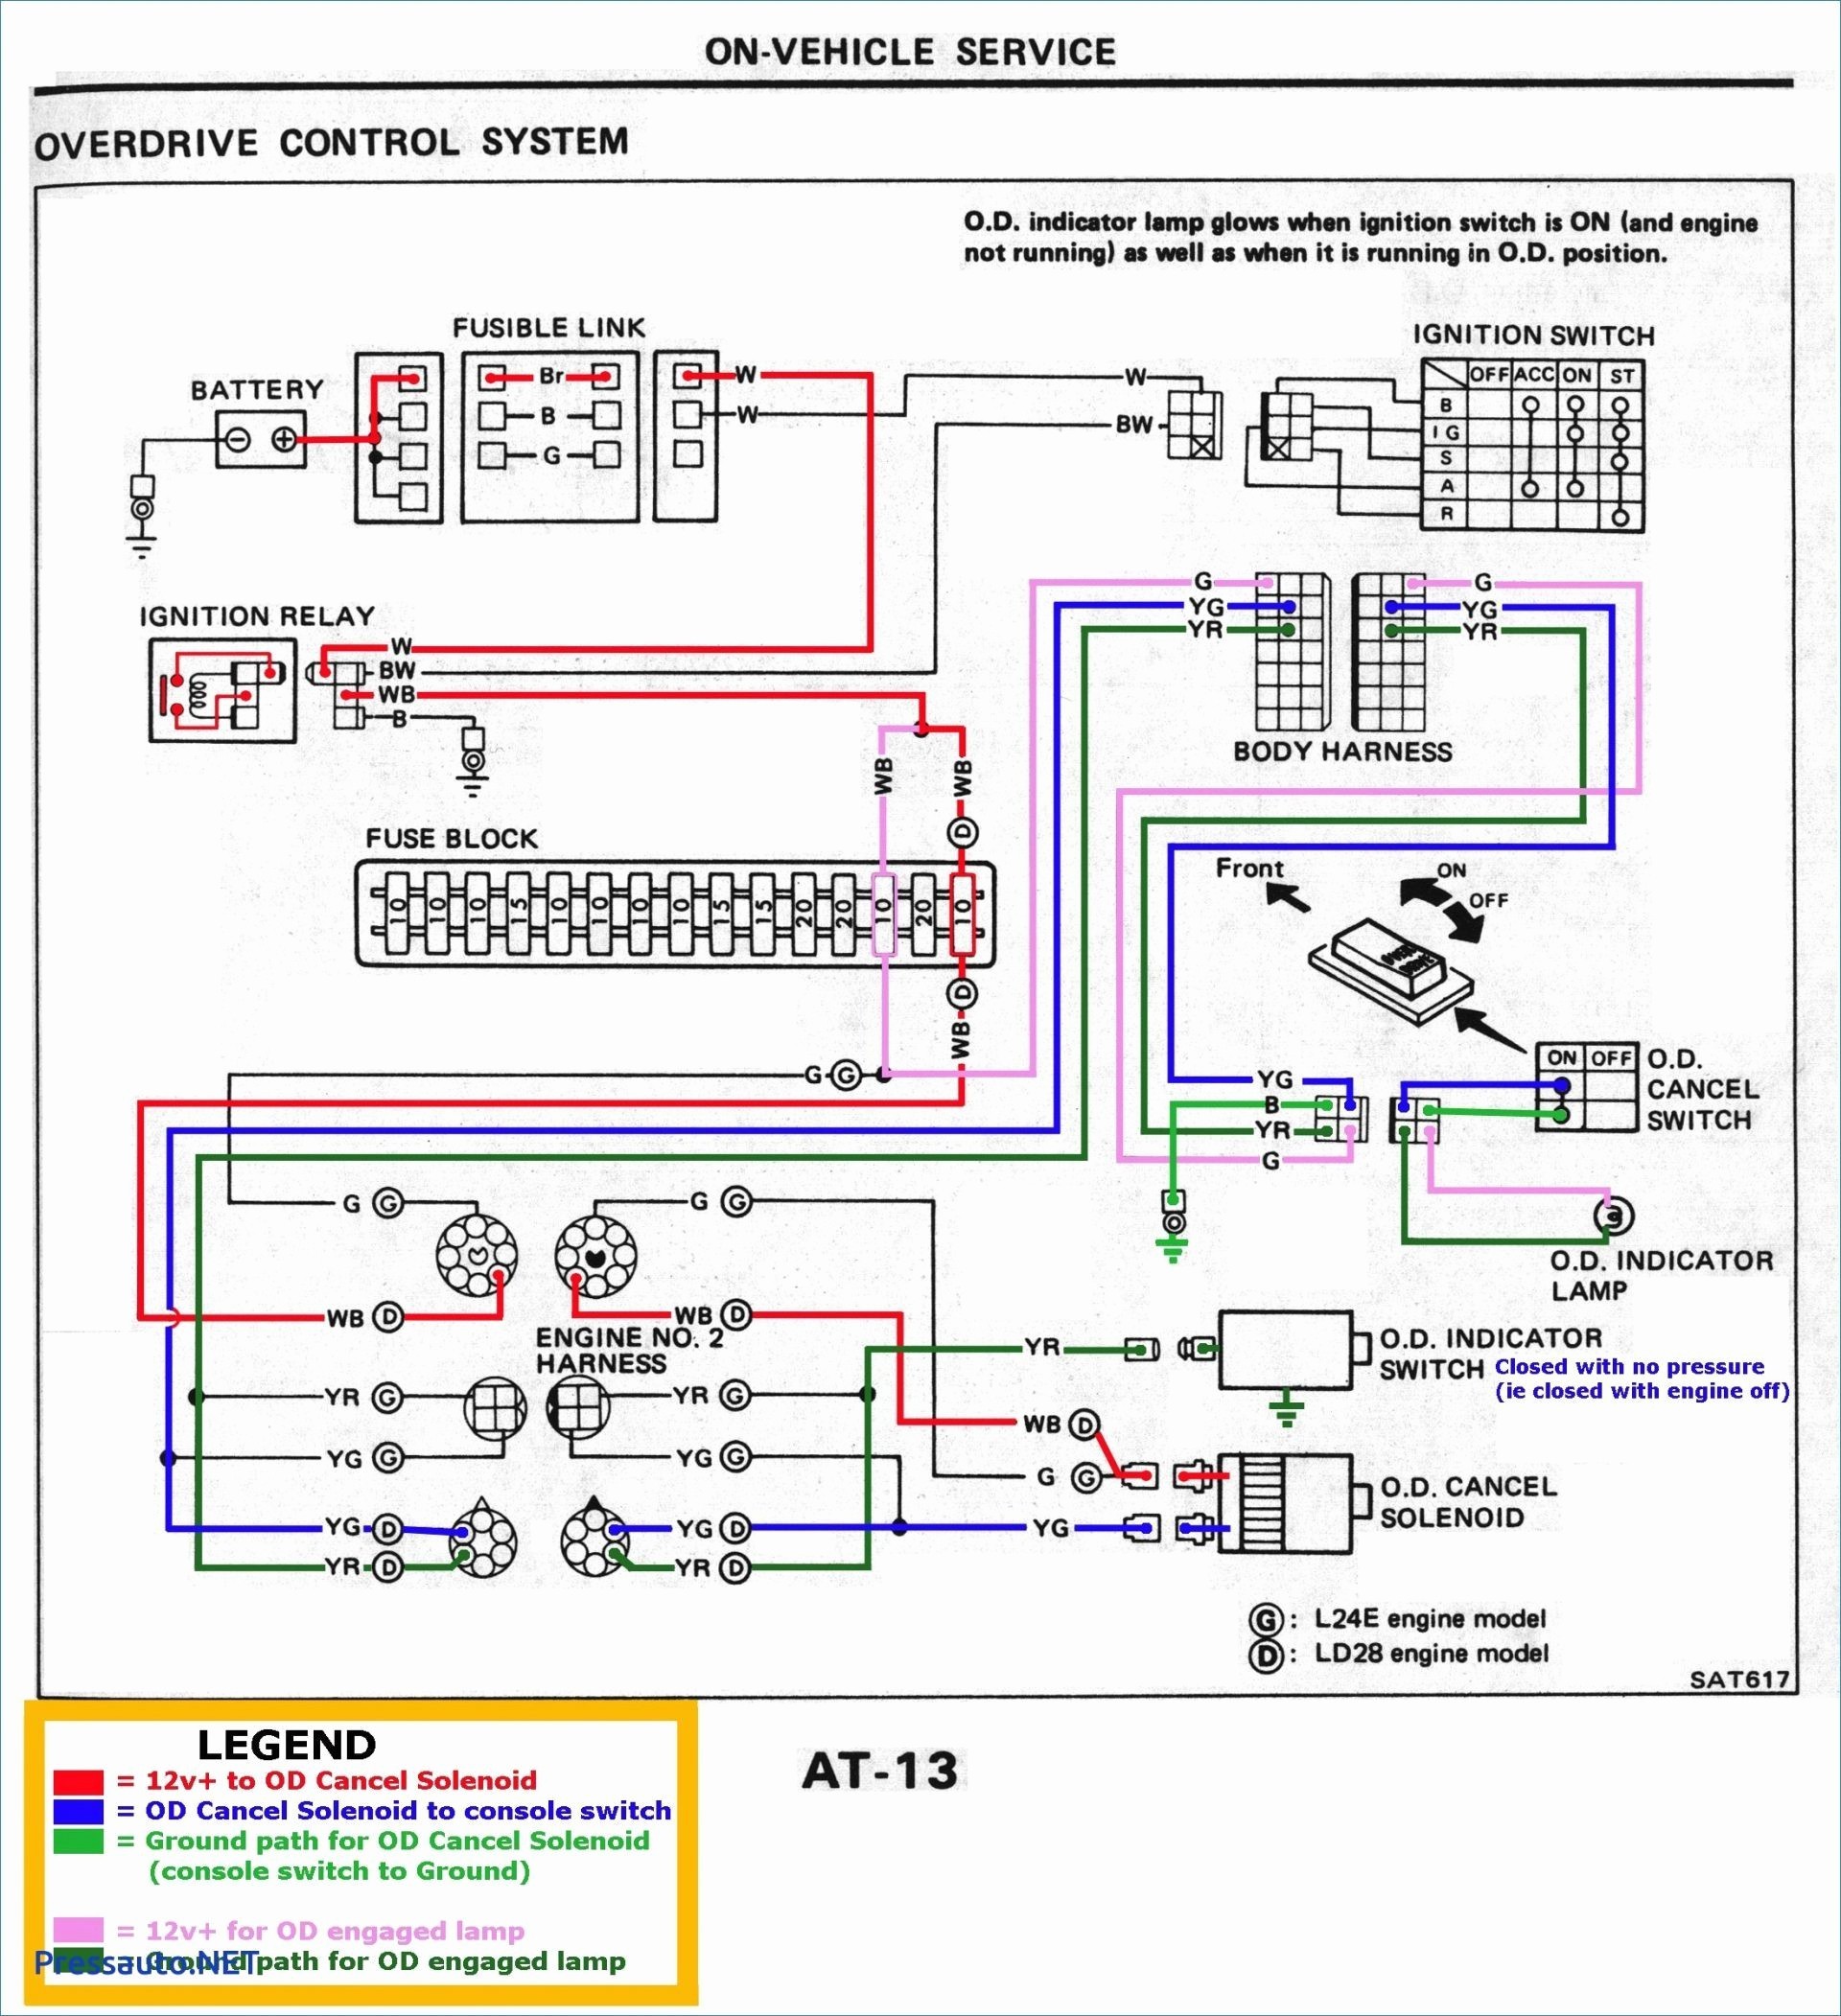 Marine Diesel Engine Diagram Dodge Ram Wheelbase Chart Lovely Electrical Wiring Circuits Diesel Of Marine Diesel Engine Diagram